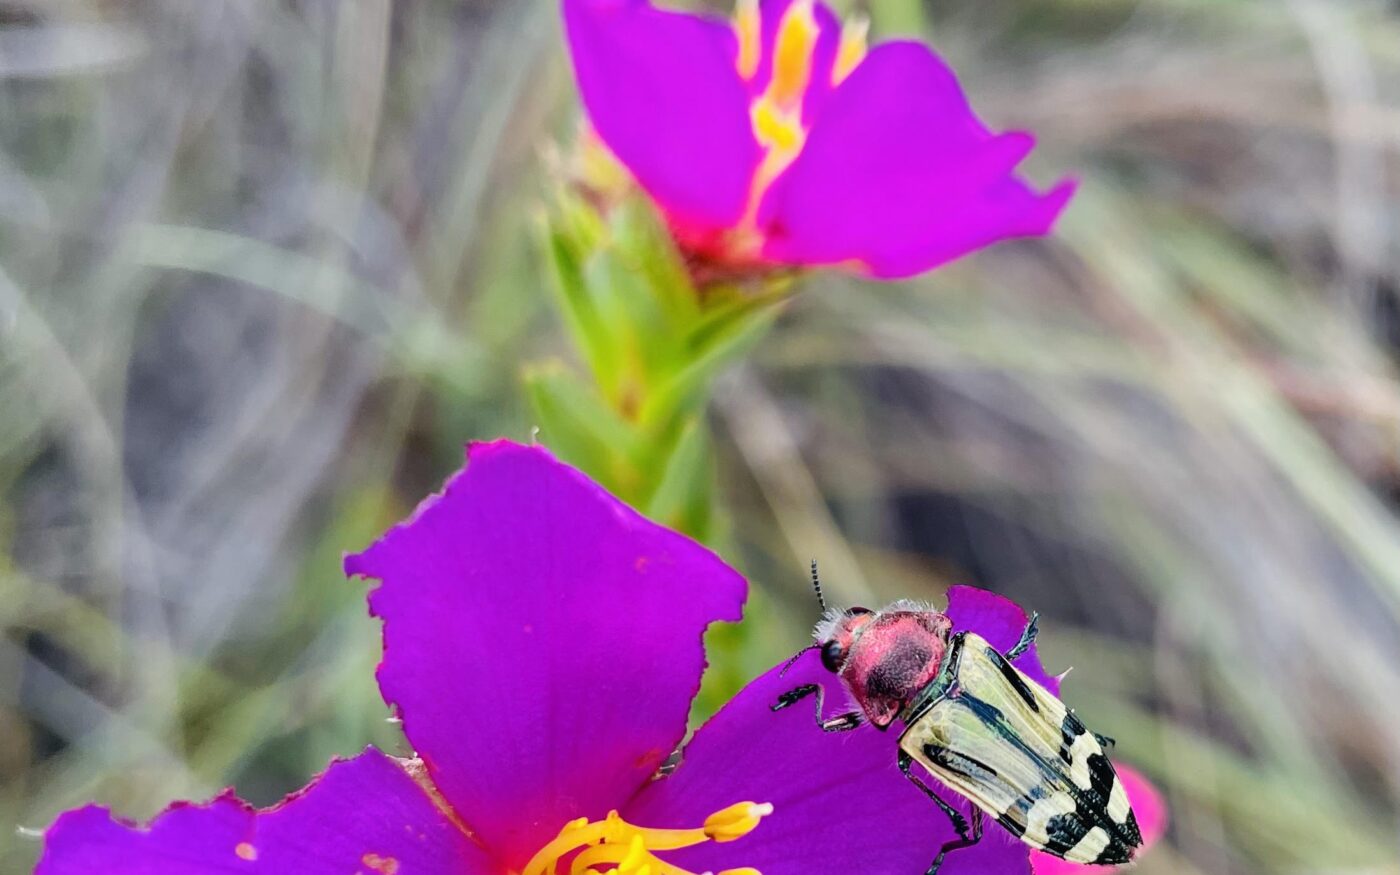 Florivore beetle in a purple flower